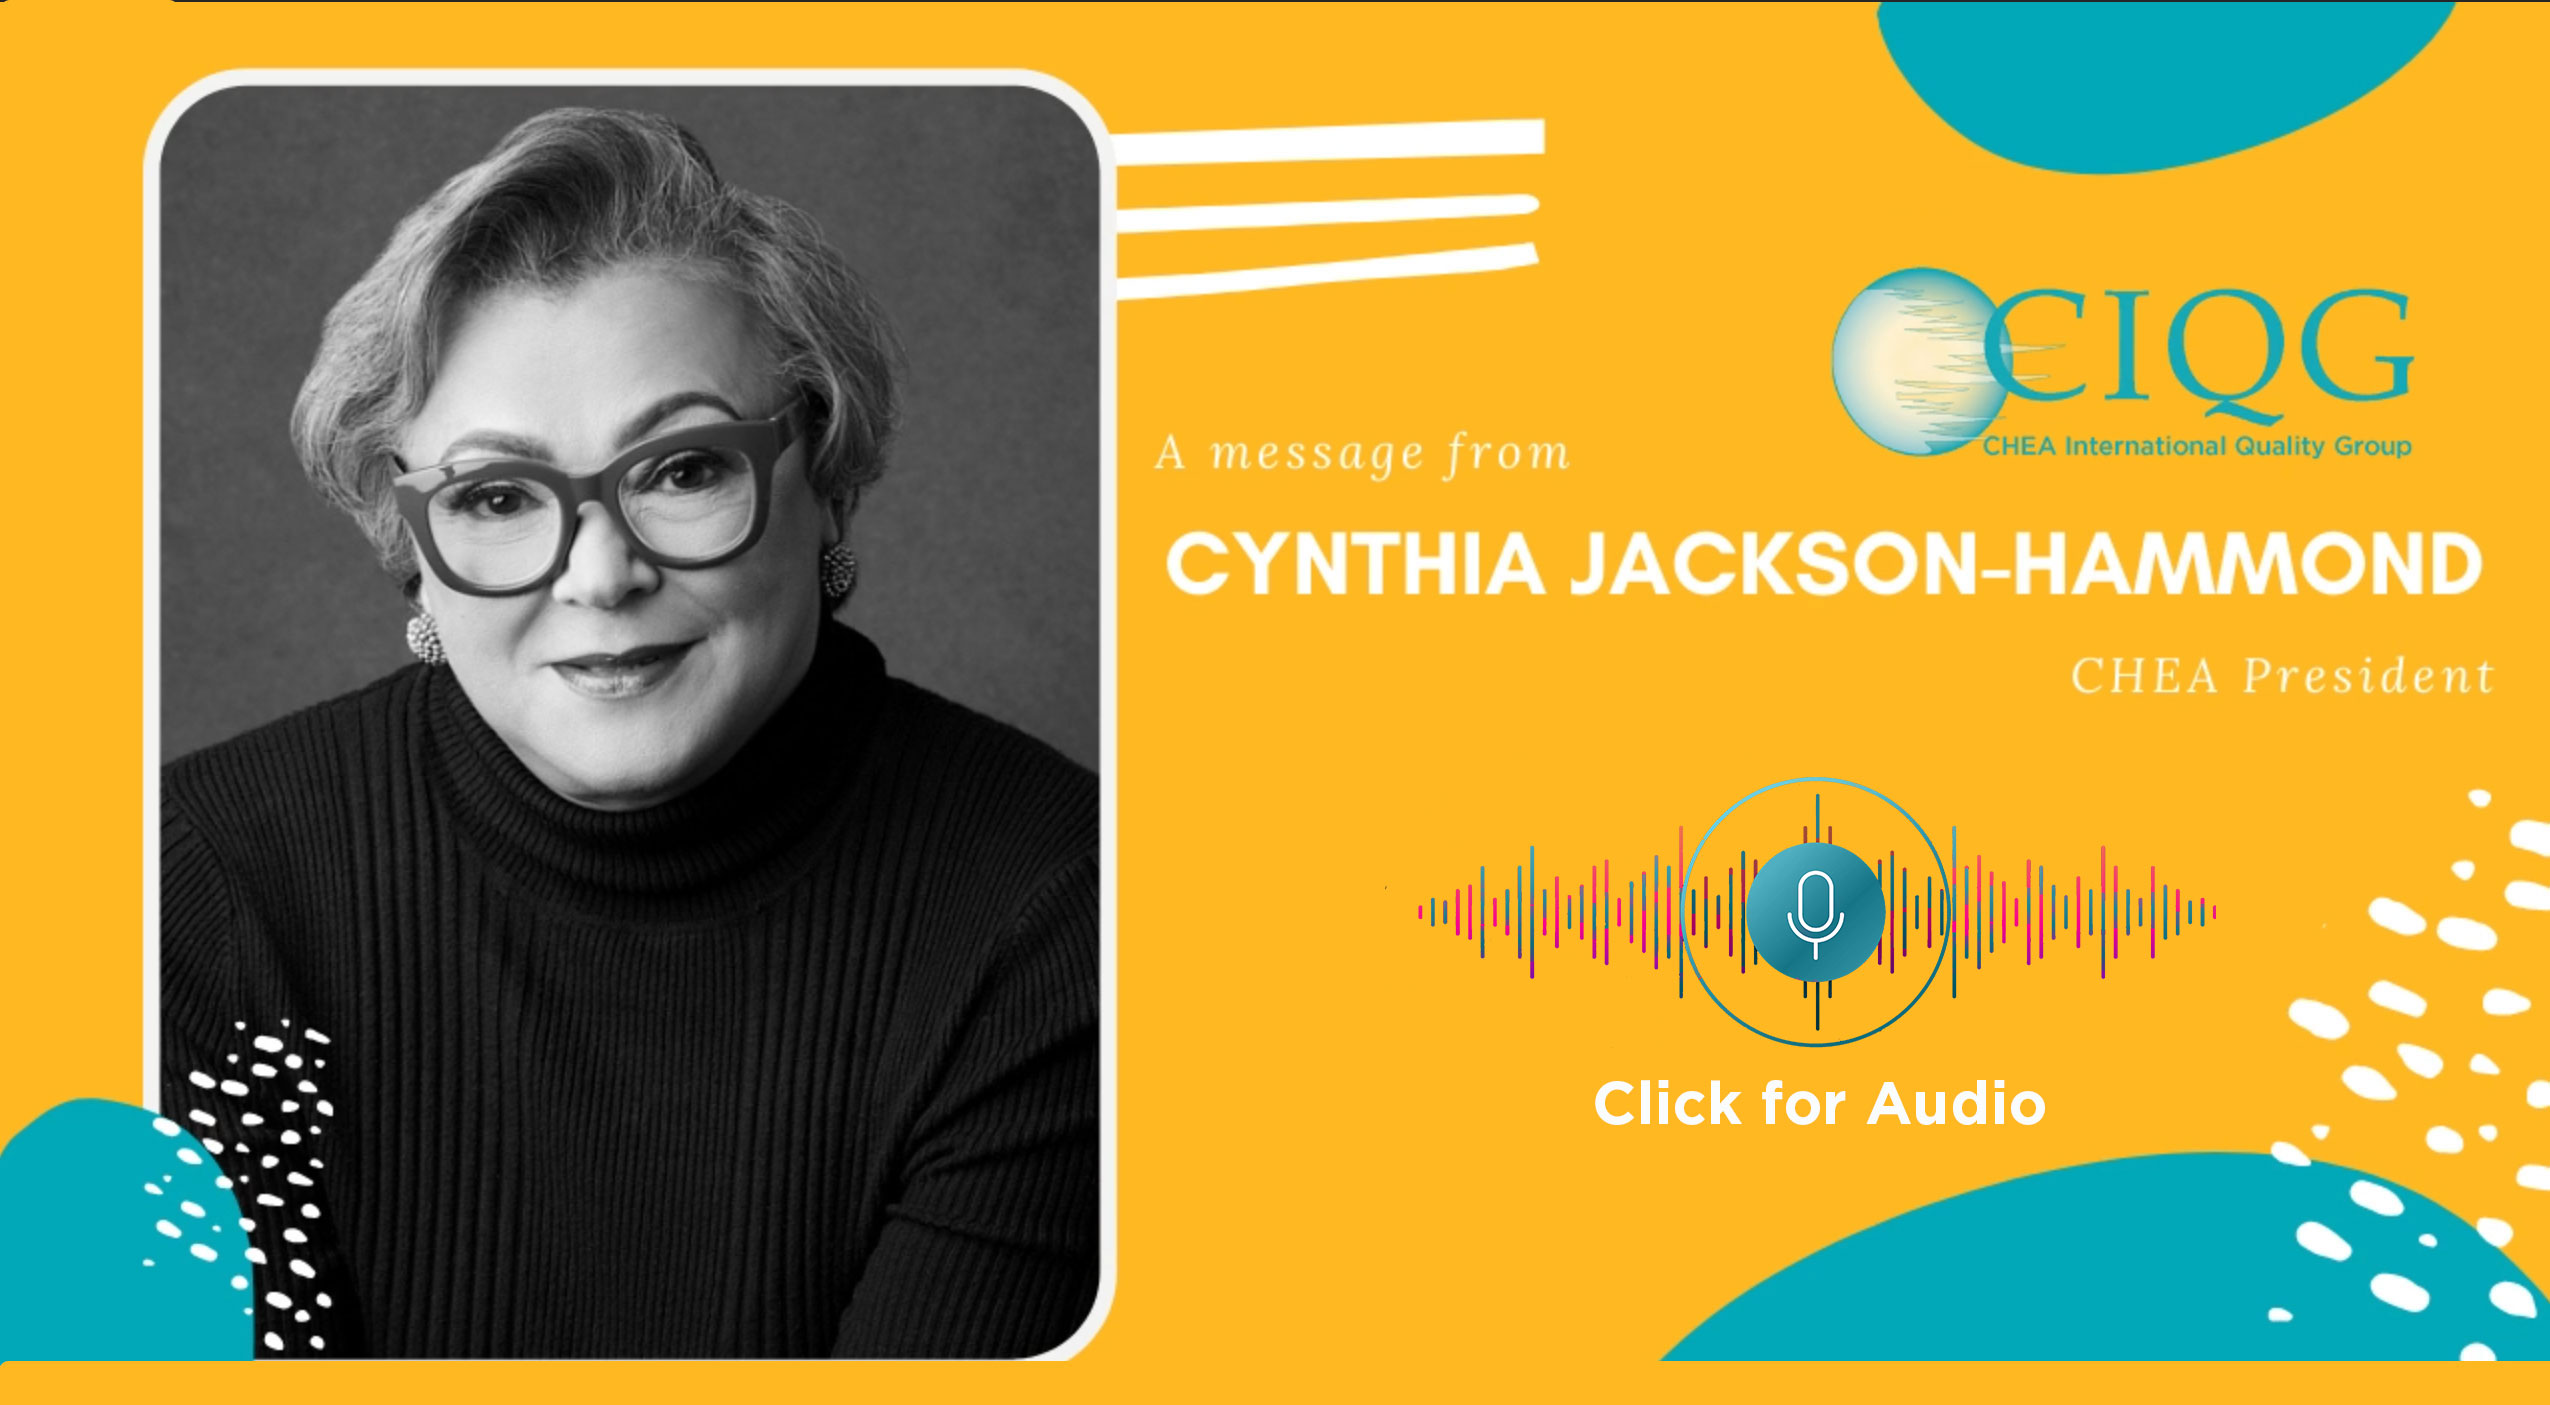 Cynthia Jackson-Hammond